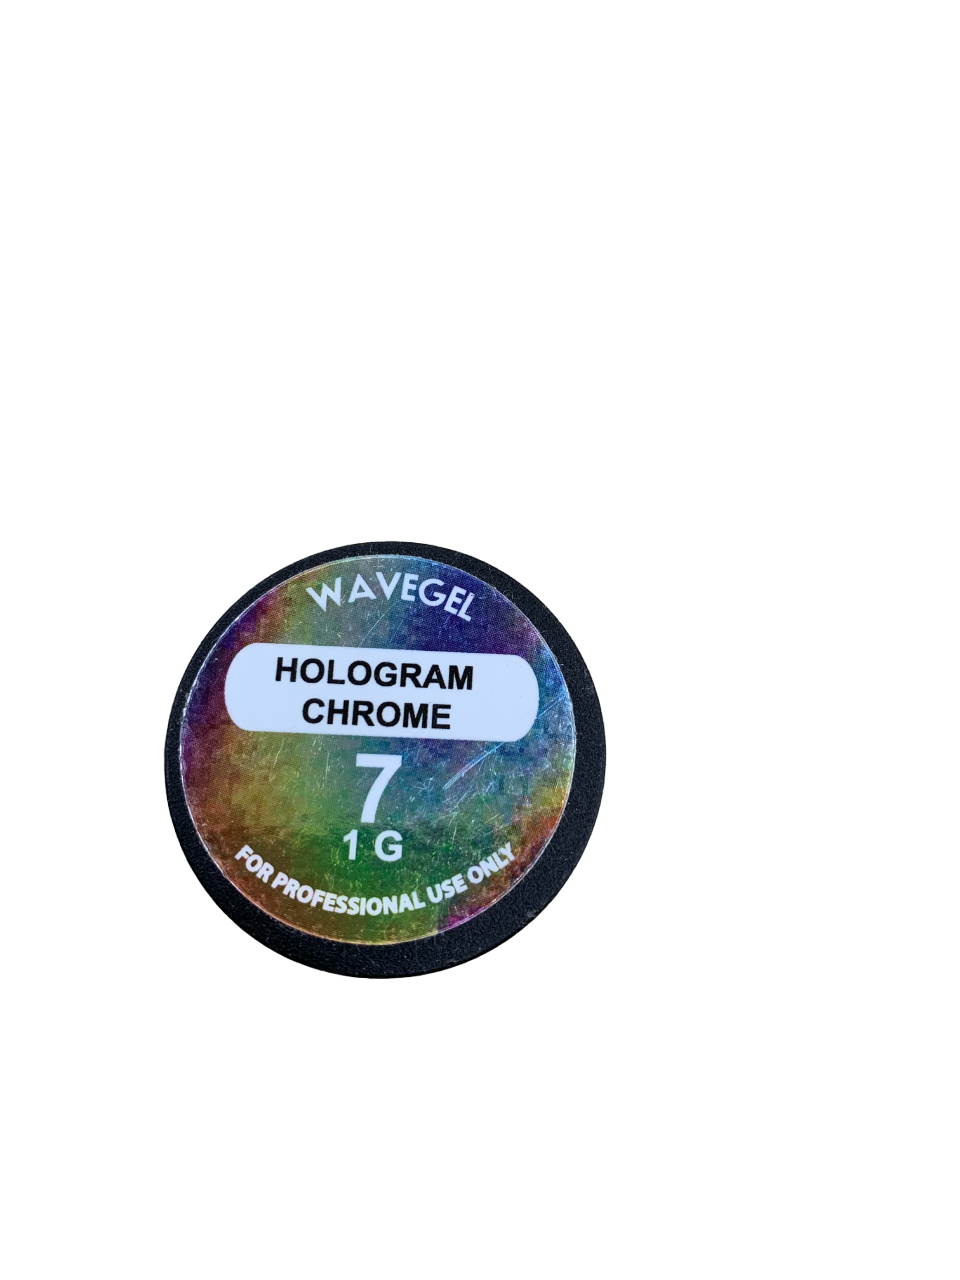 Wavegel Hologram Chrome 7